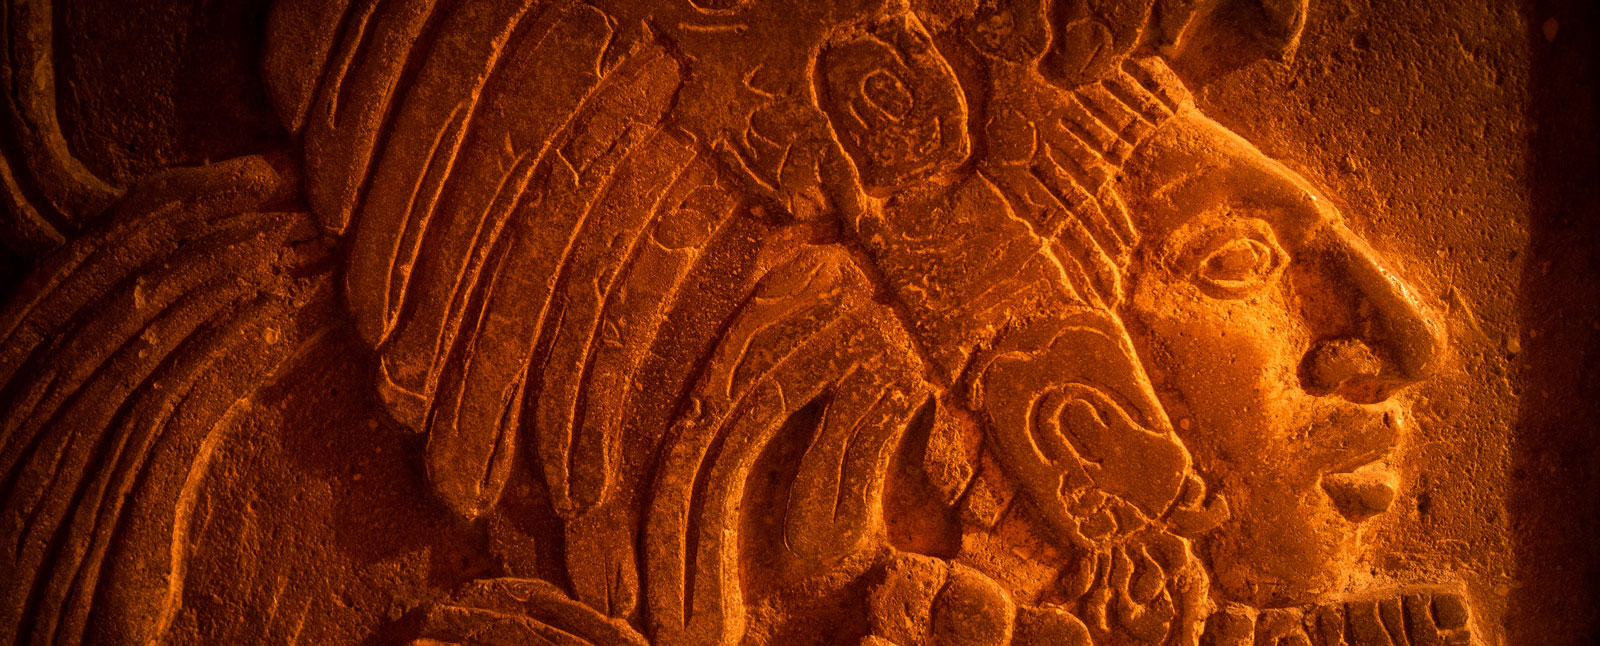 Mayan carving at Chichen Itza, Mexico